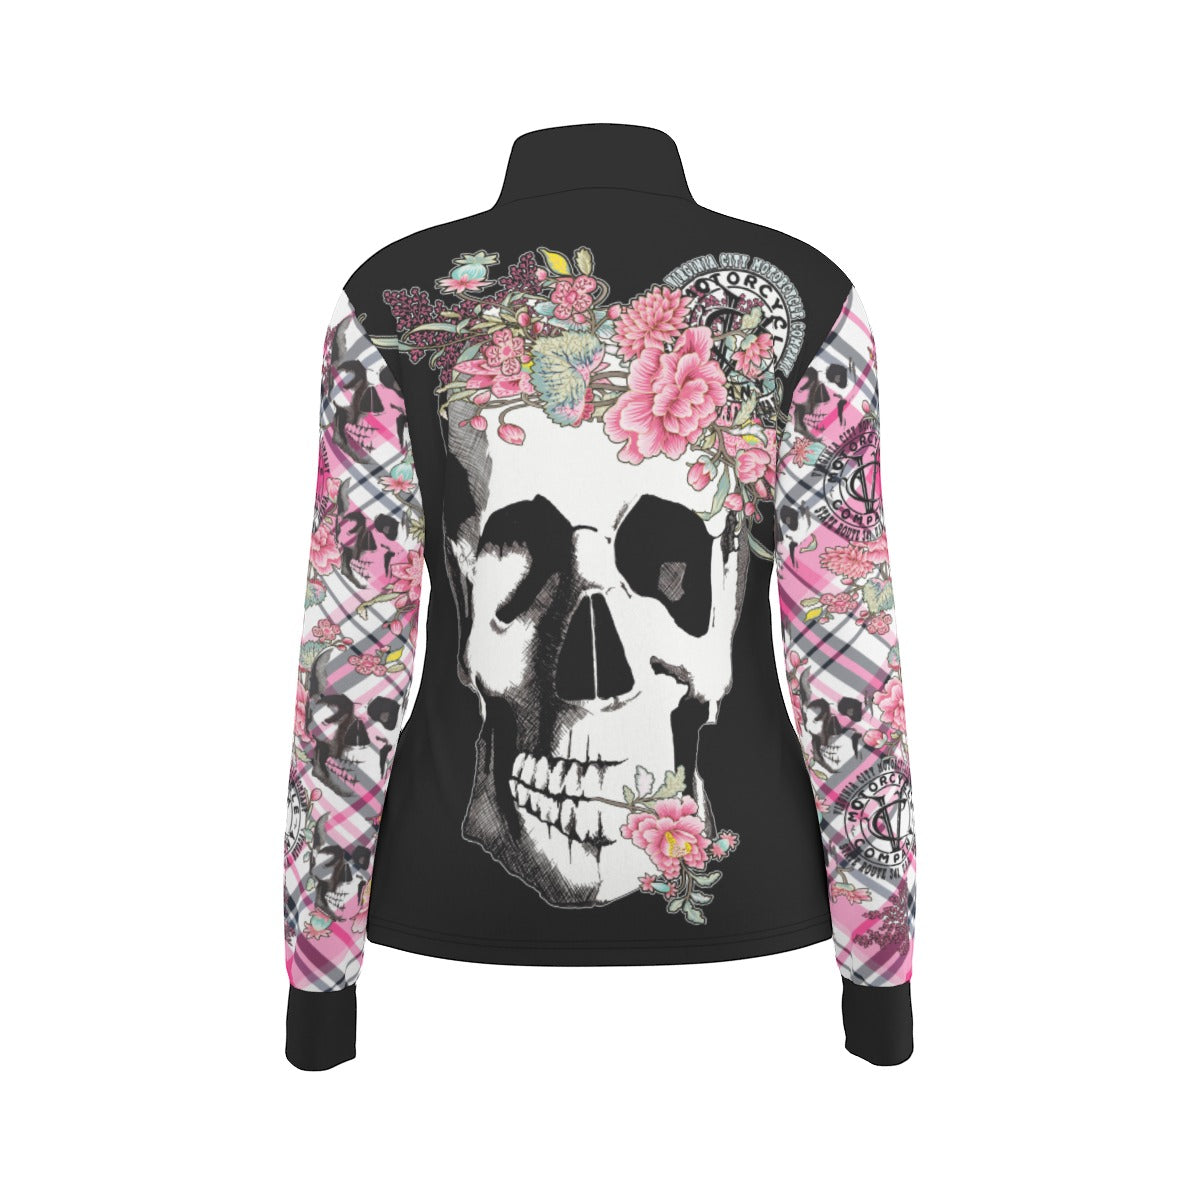 Skull and Flower Ladies Zip Up Thumbhole Jacket fashion-hoodies Virginia City Motorcycle Company Apparel in Nevada USA